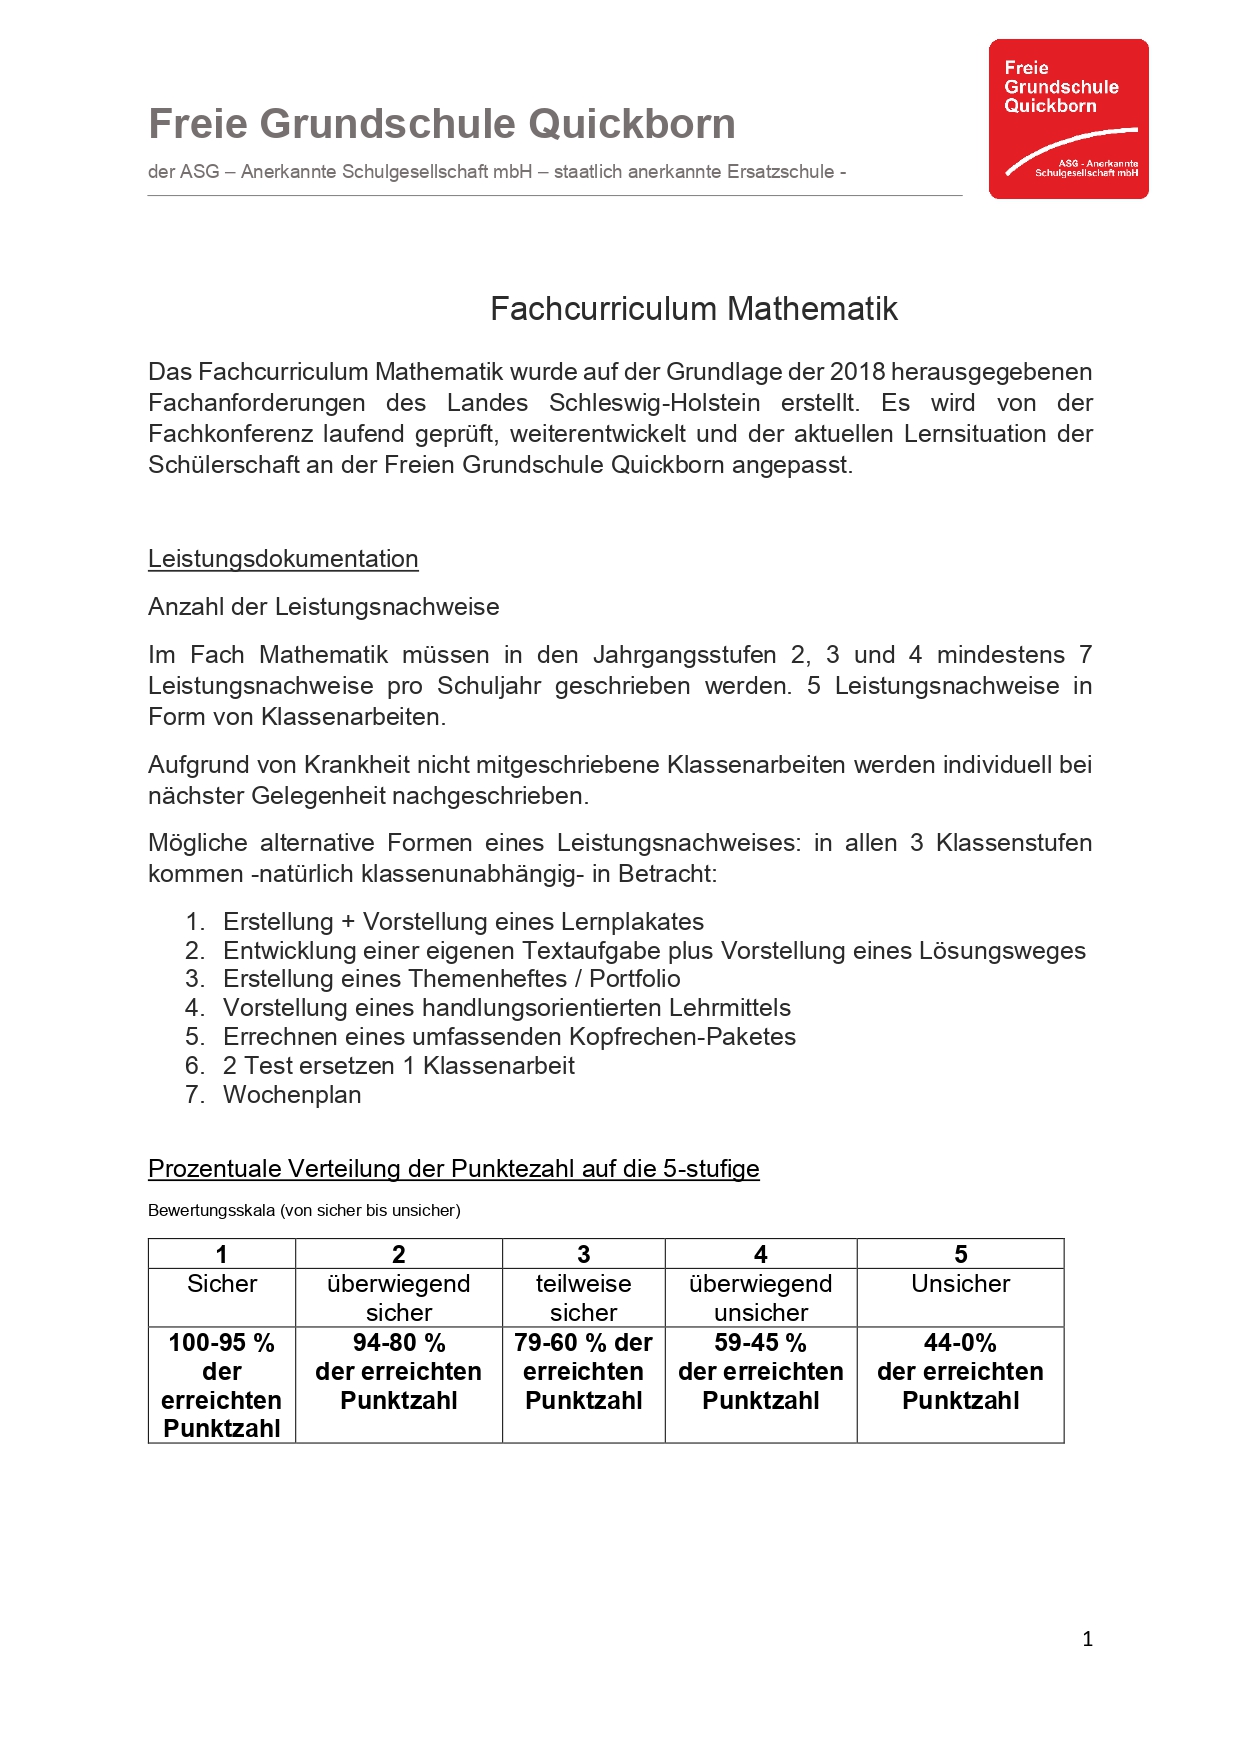 Fachcurriculum Mathematik FGS page 0001